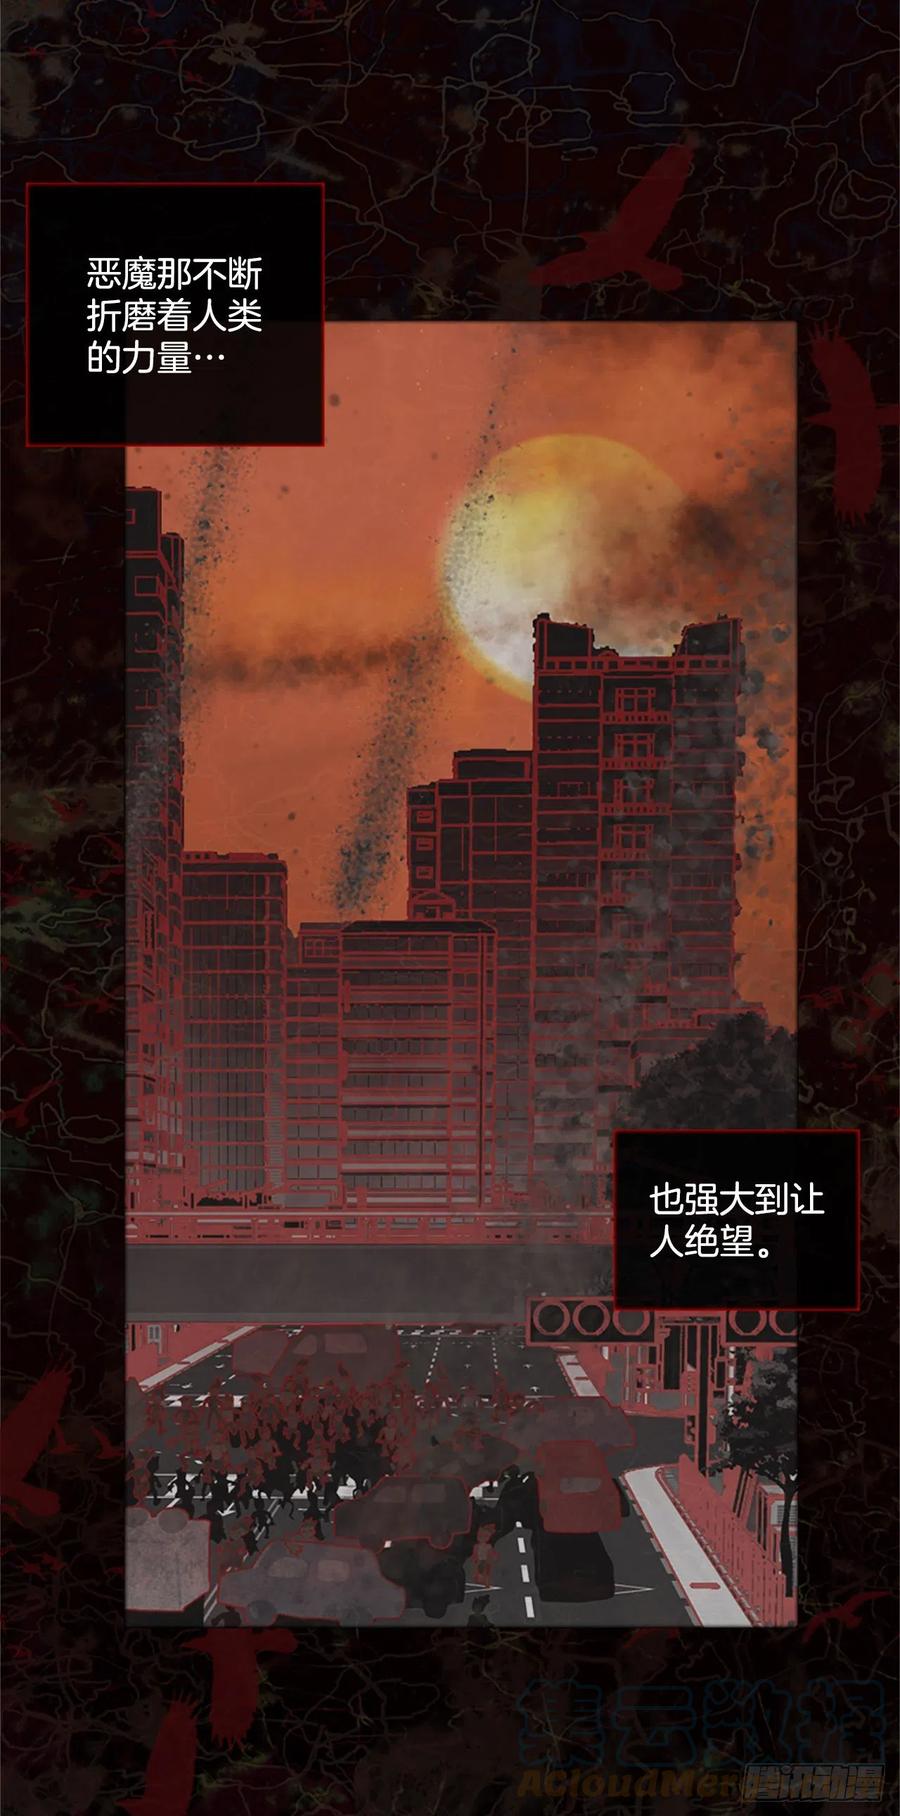 梦境毁灭Dreamcide-167.death（8）全彩韩漫标签